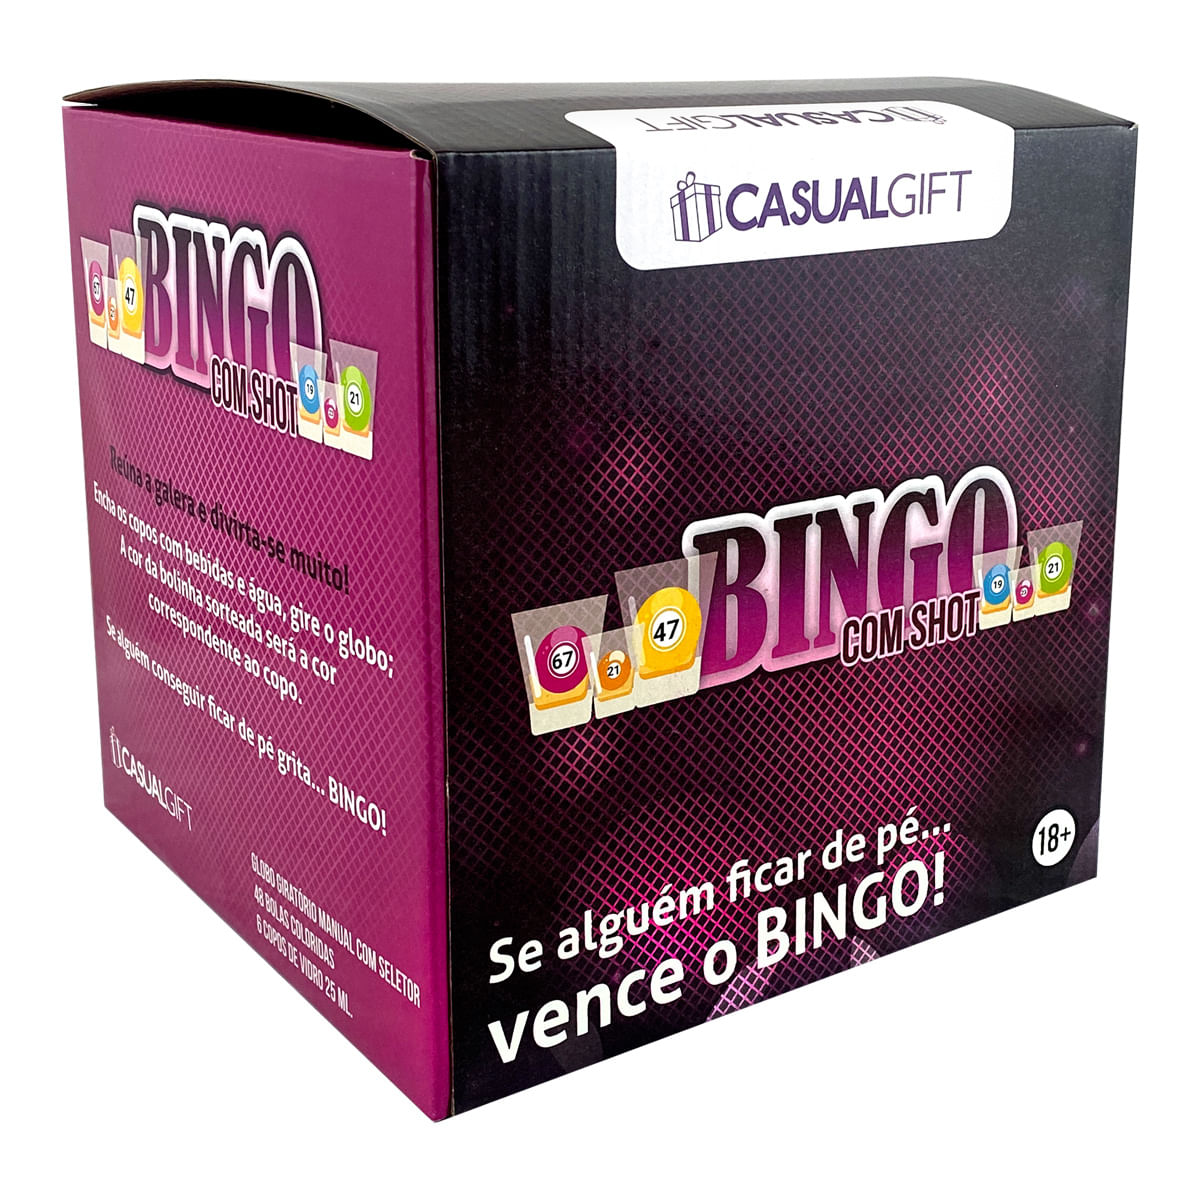 Jogo Bingo com Shot Casual Gift